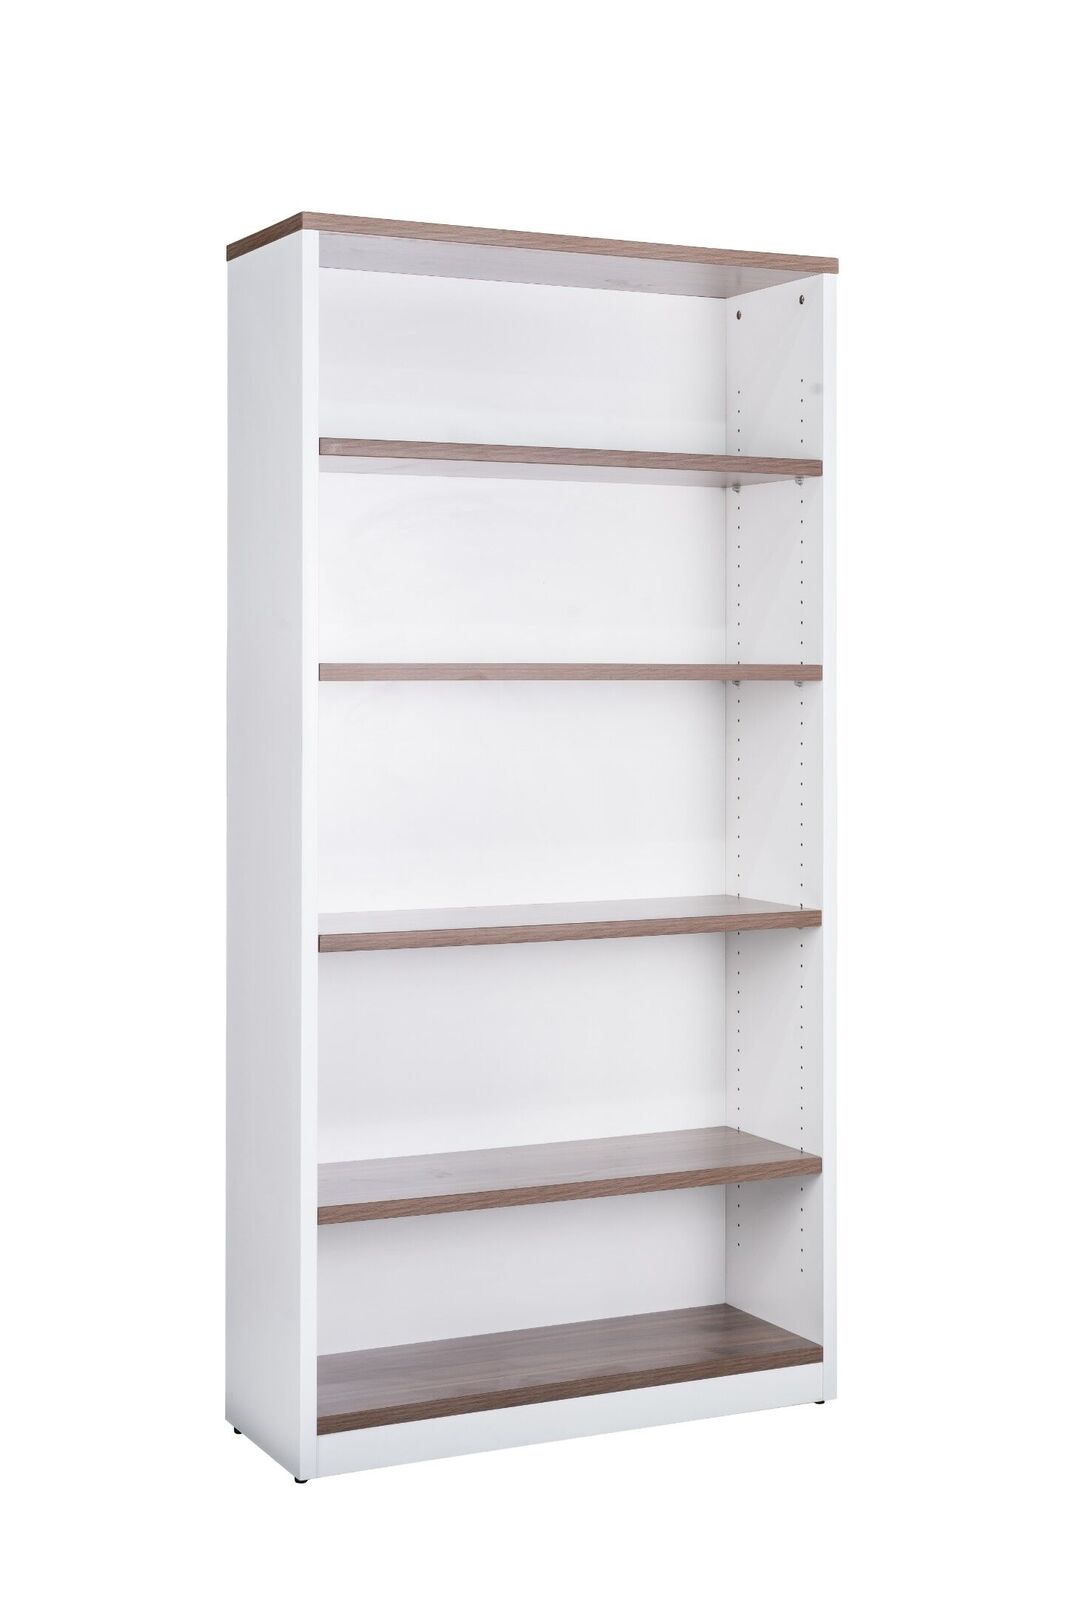 5 Shelf Bookcase Bookshelf Premier Office Furniture Shelving 1800mm H x 900mm W Casnan White